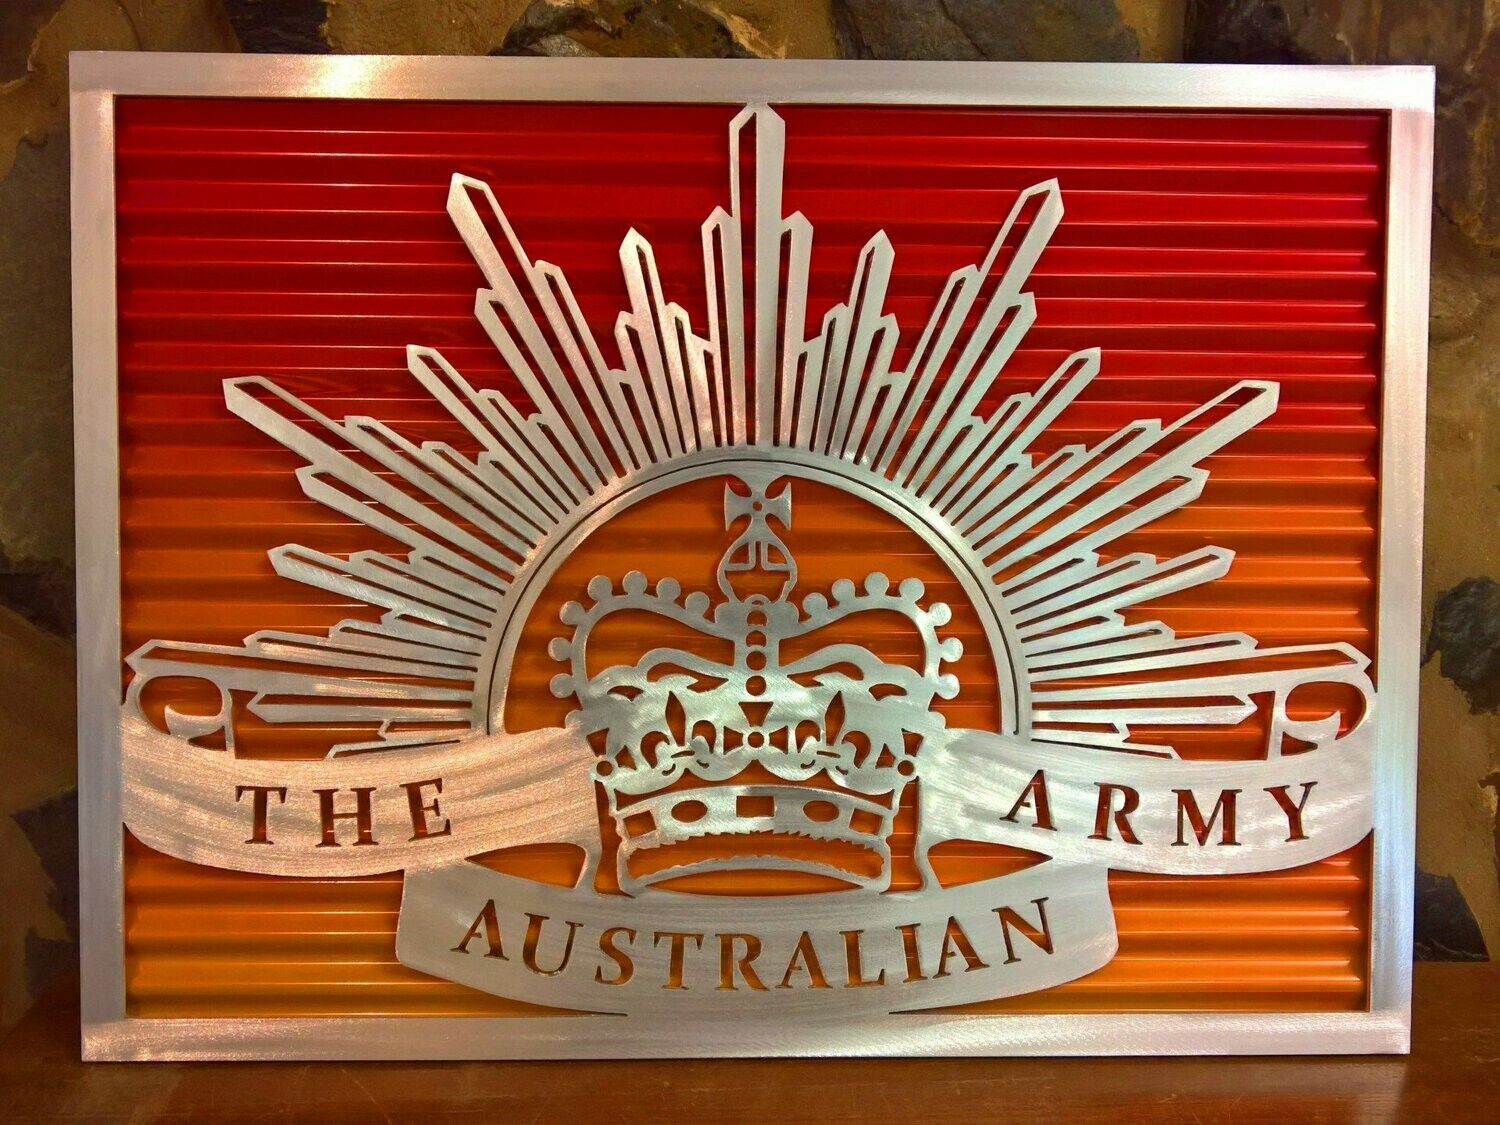 Australian Army Badge